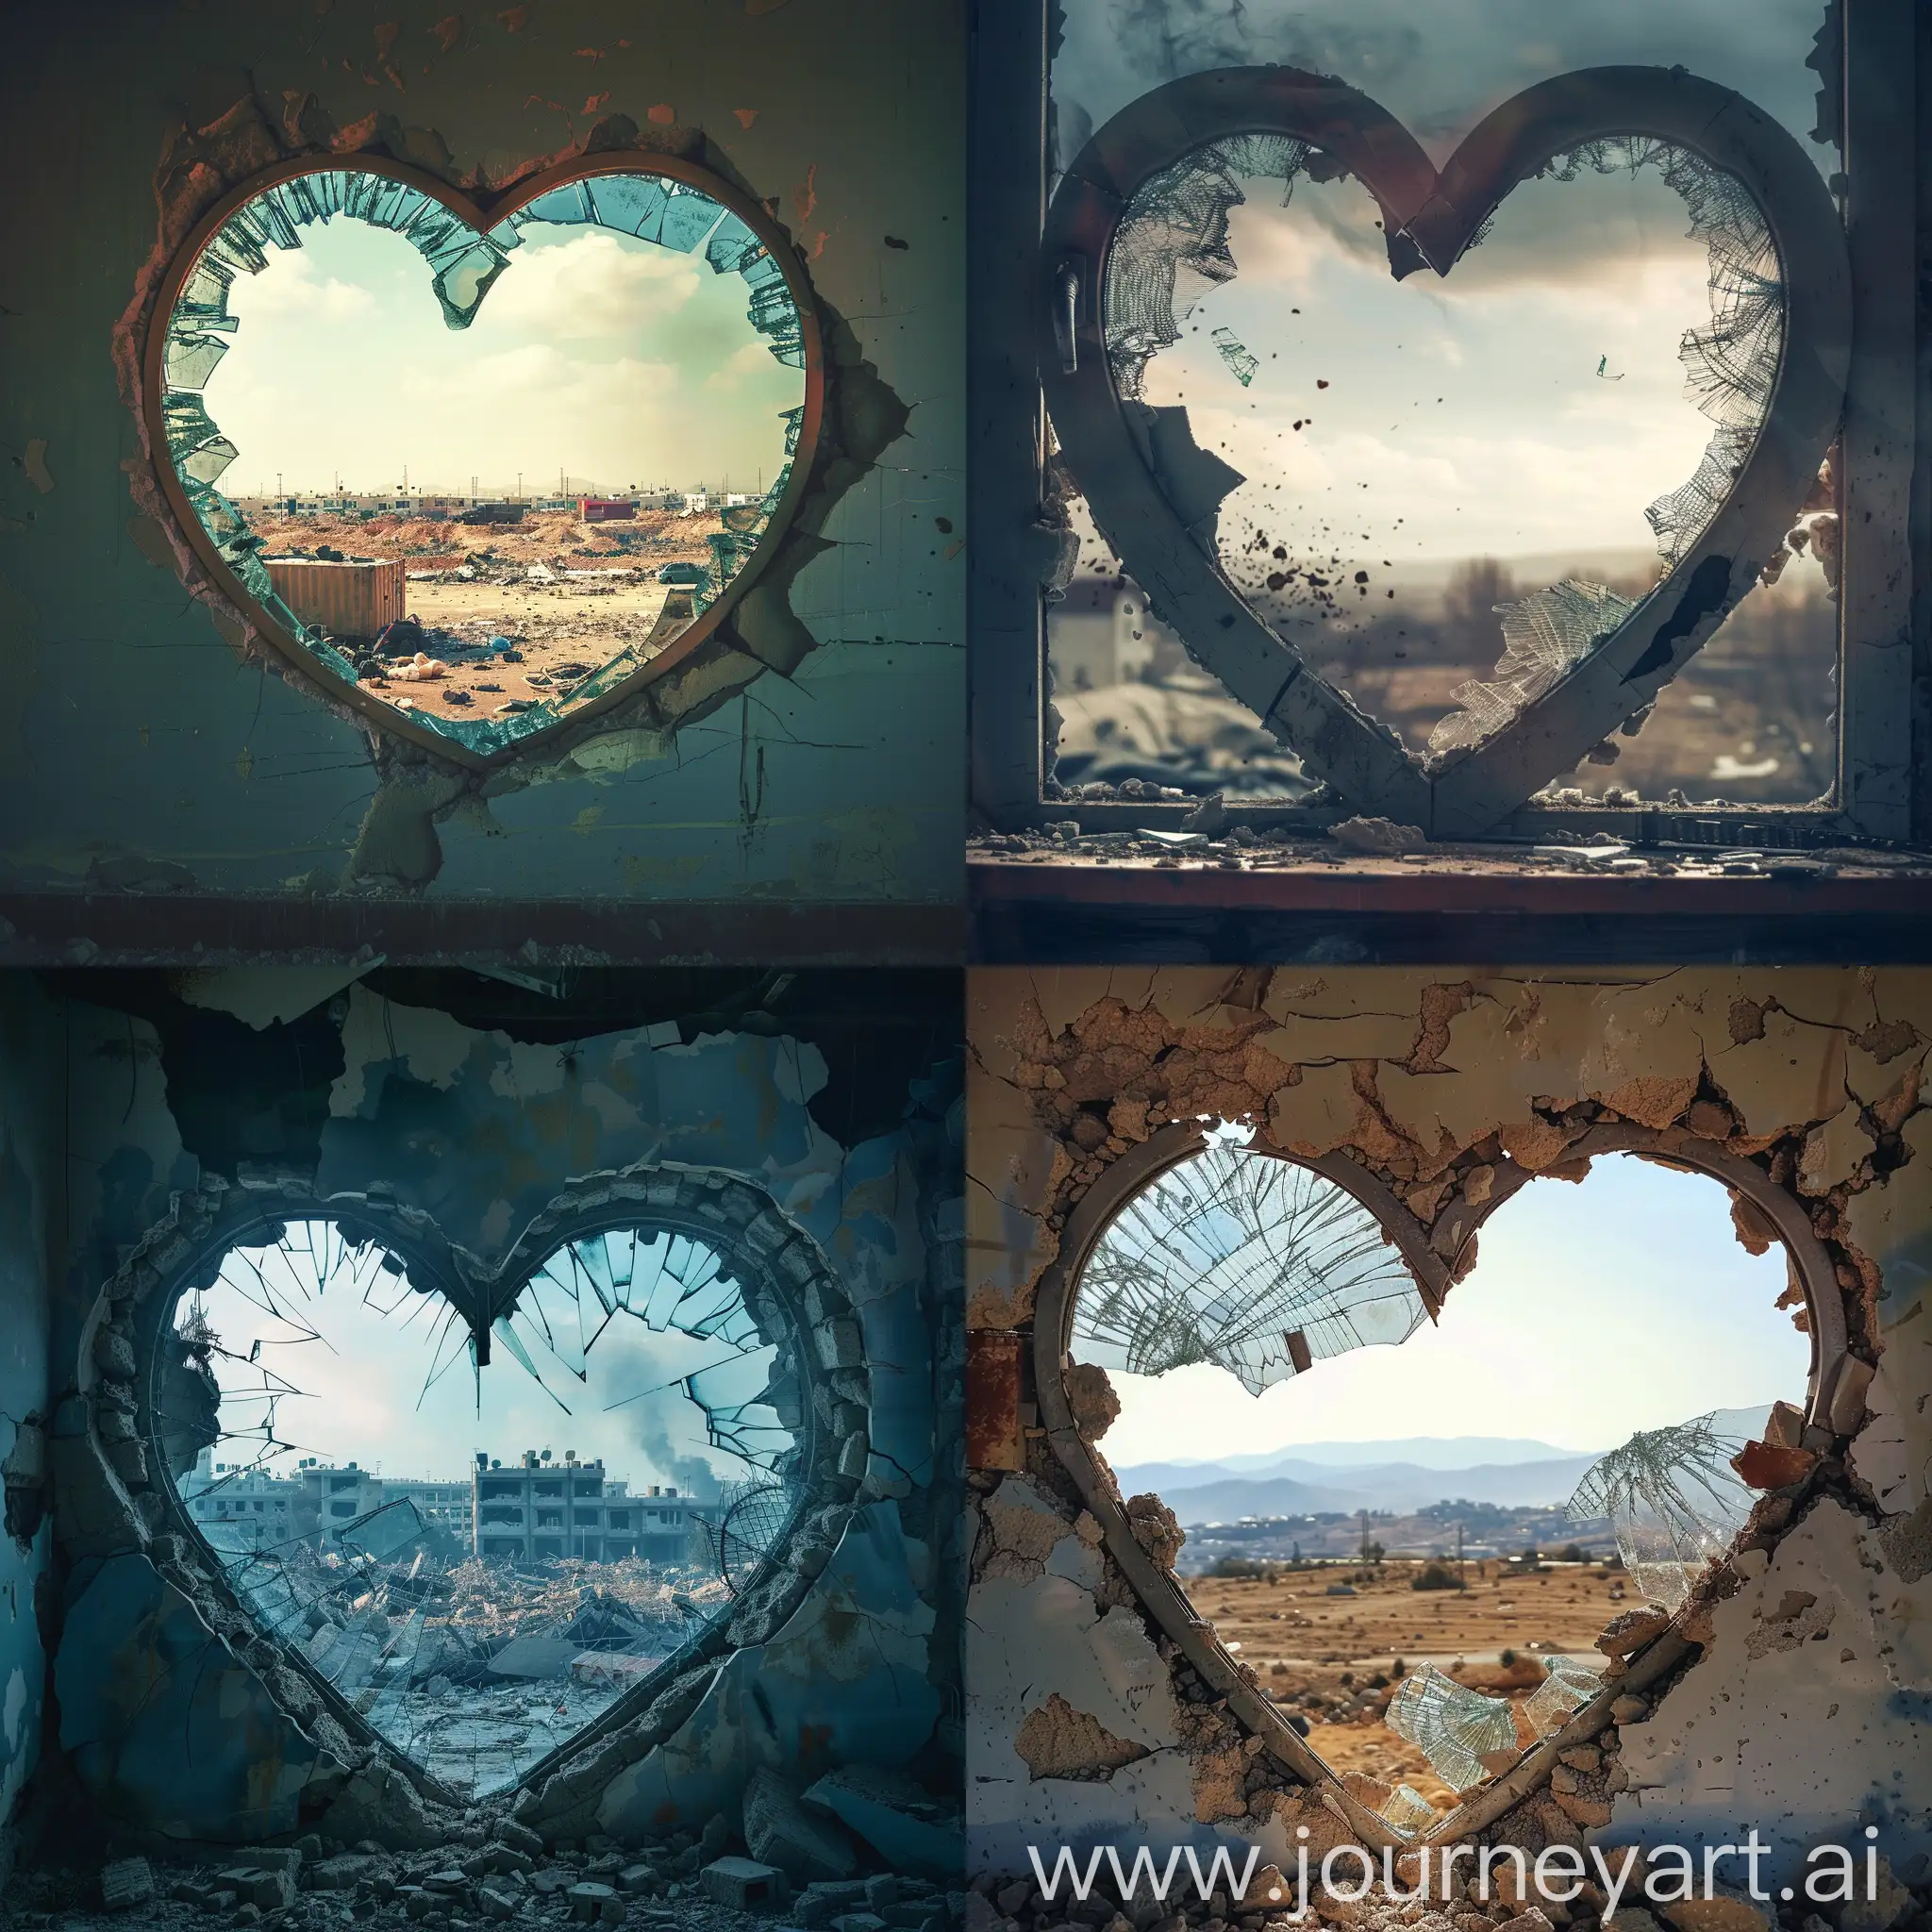 Watching a war zone through a broken window in the shape of heart.